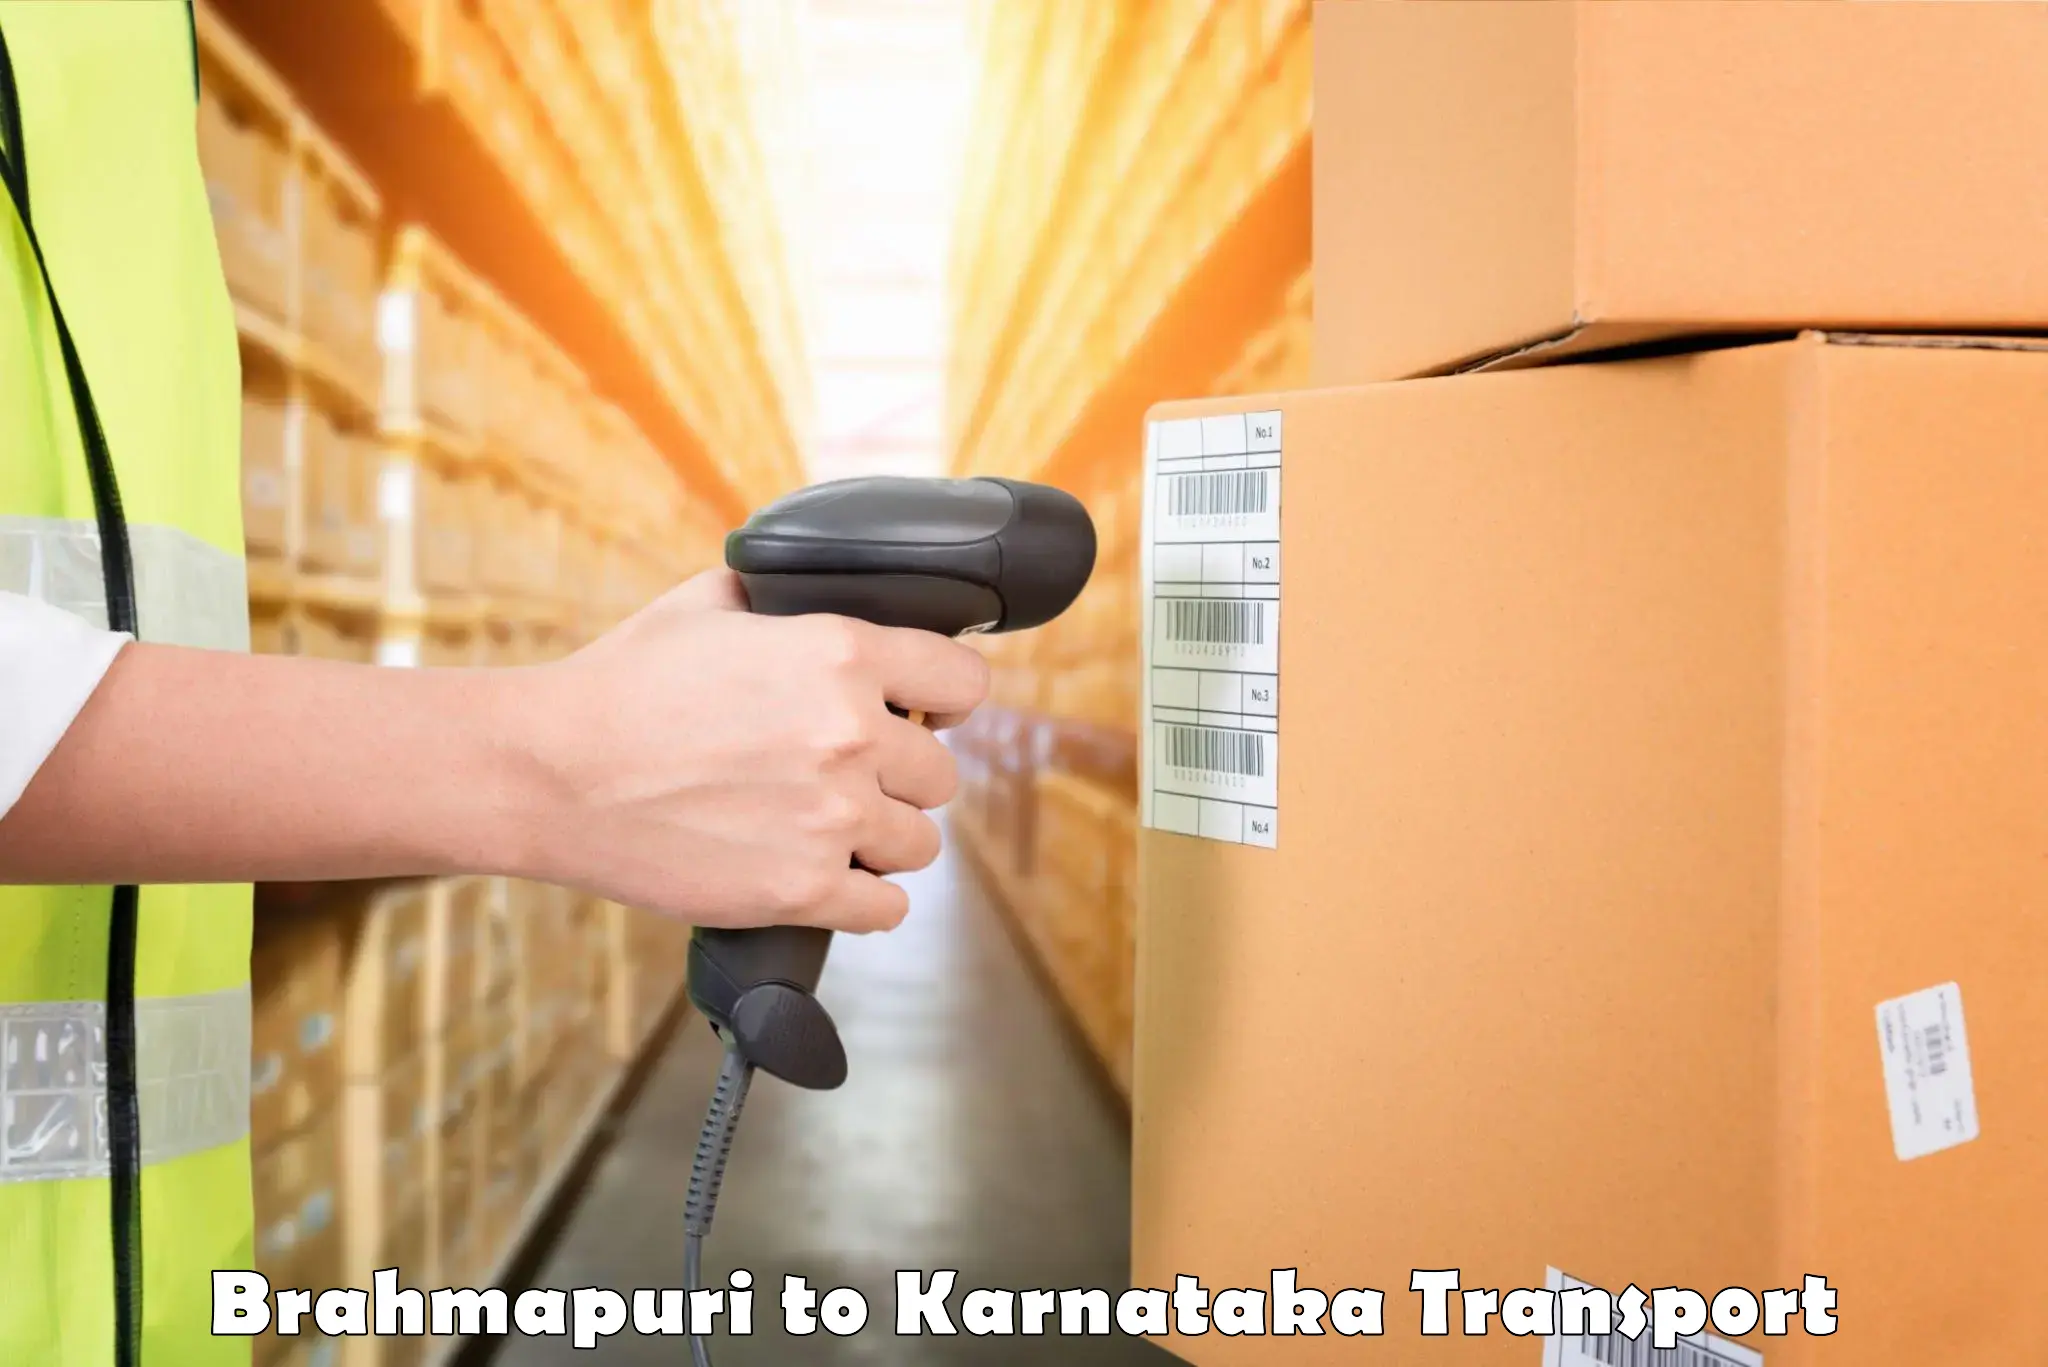 Truck transport companies in India Brahmapuri to Kalaburagi